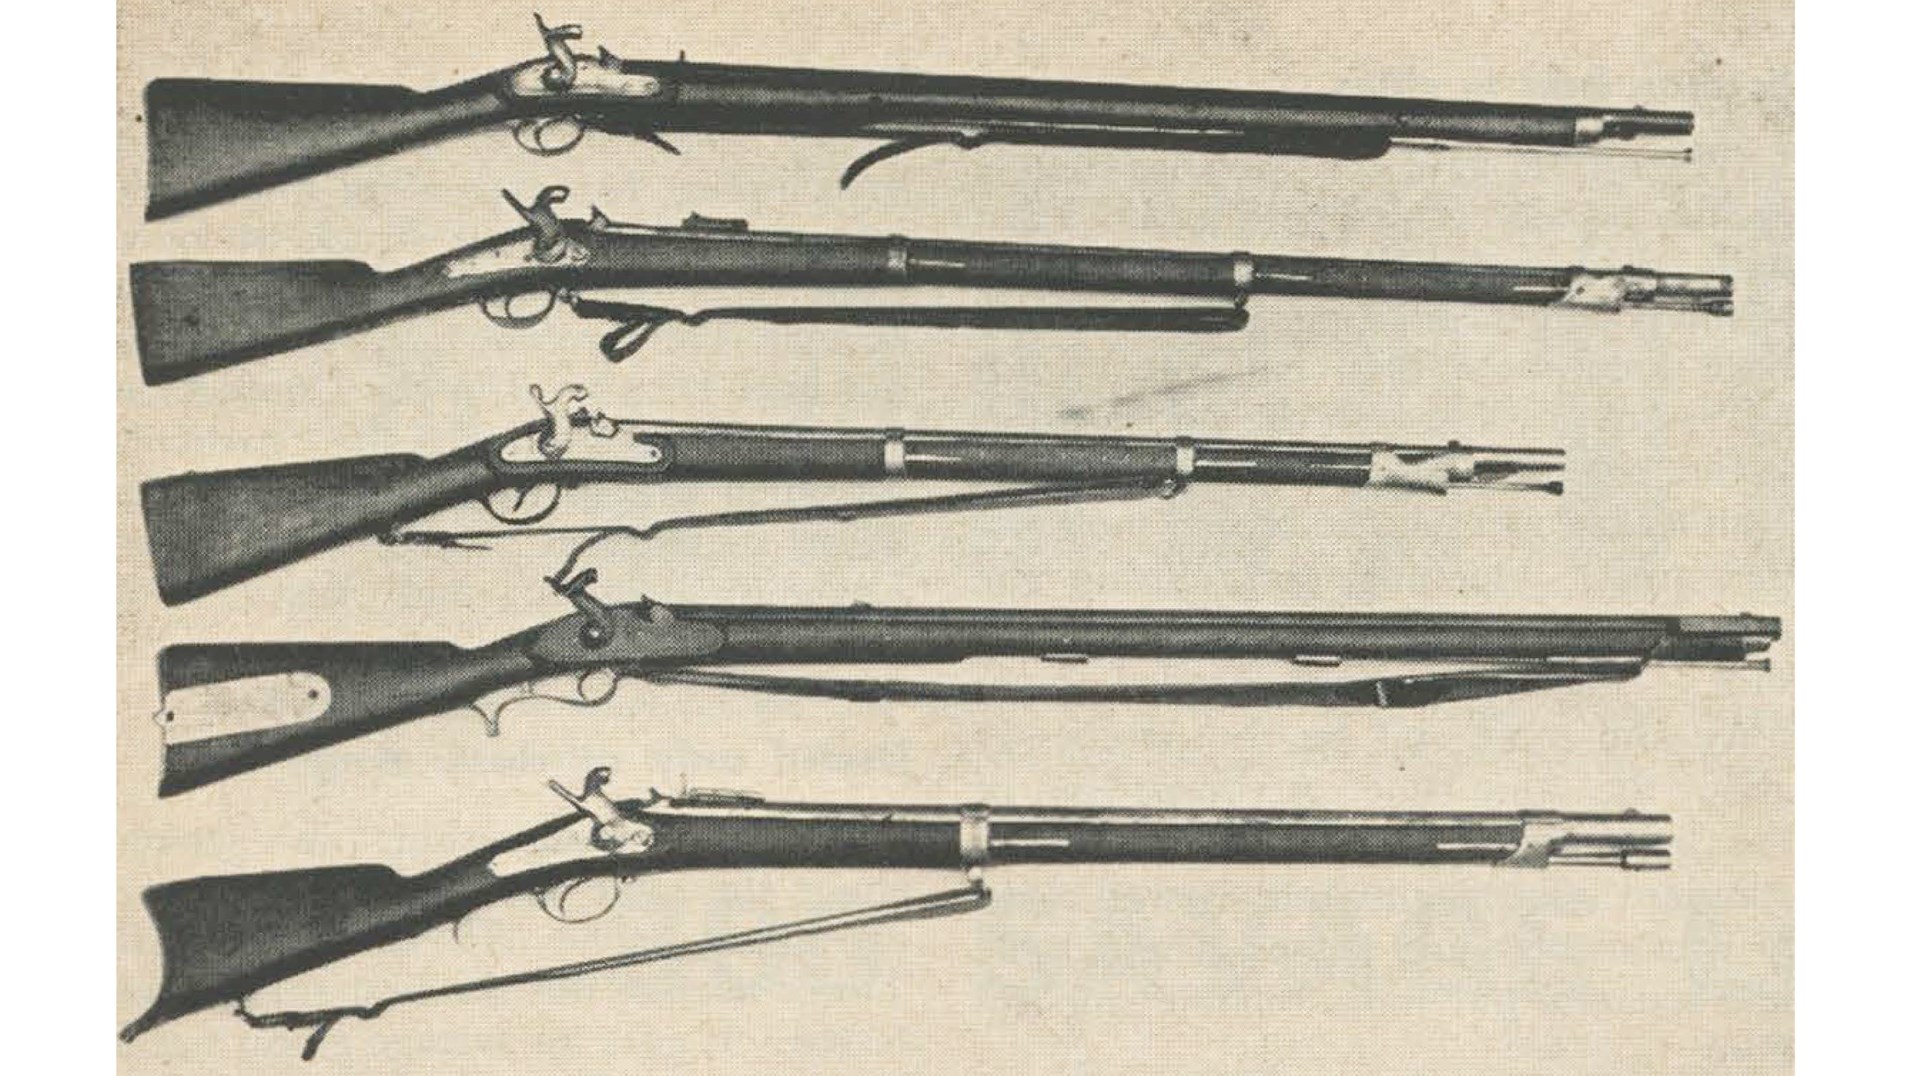 American Civil War muskets five guns stack row arranged vintage photograph